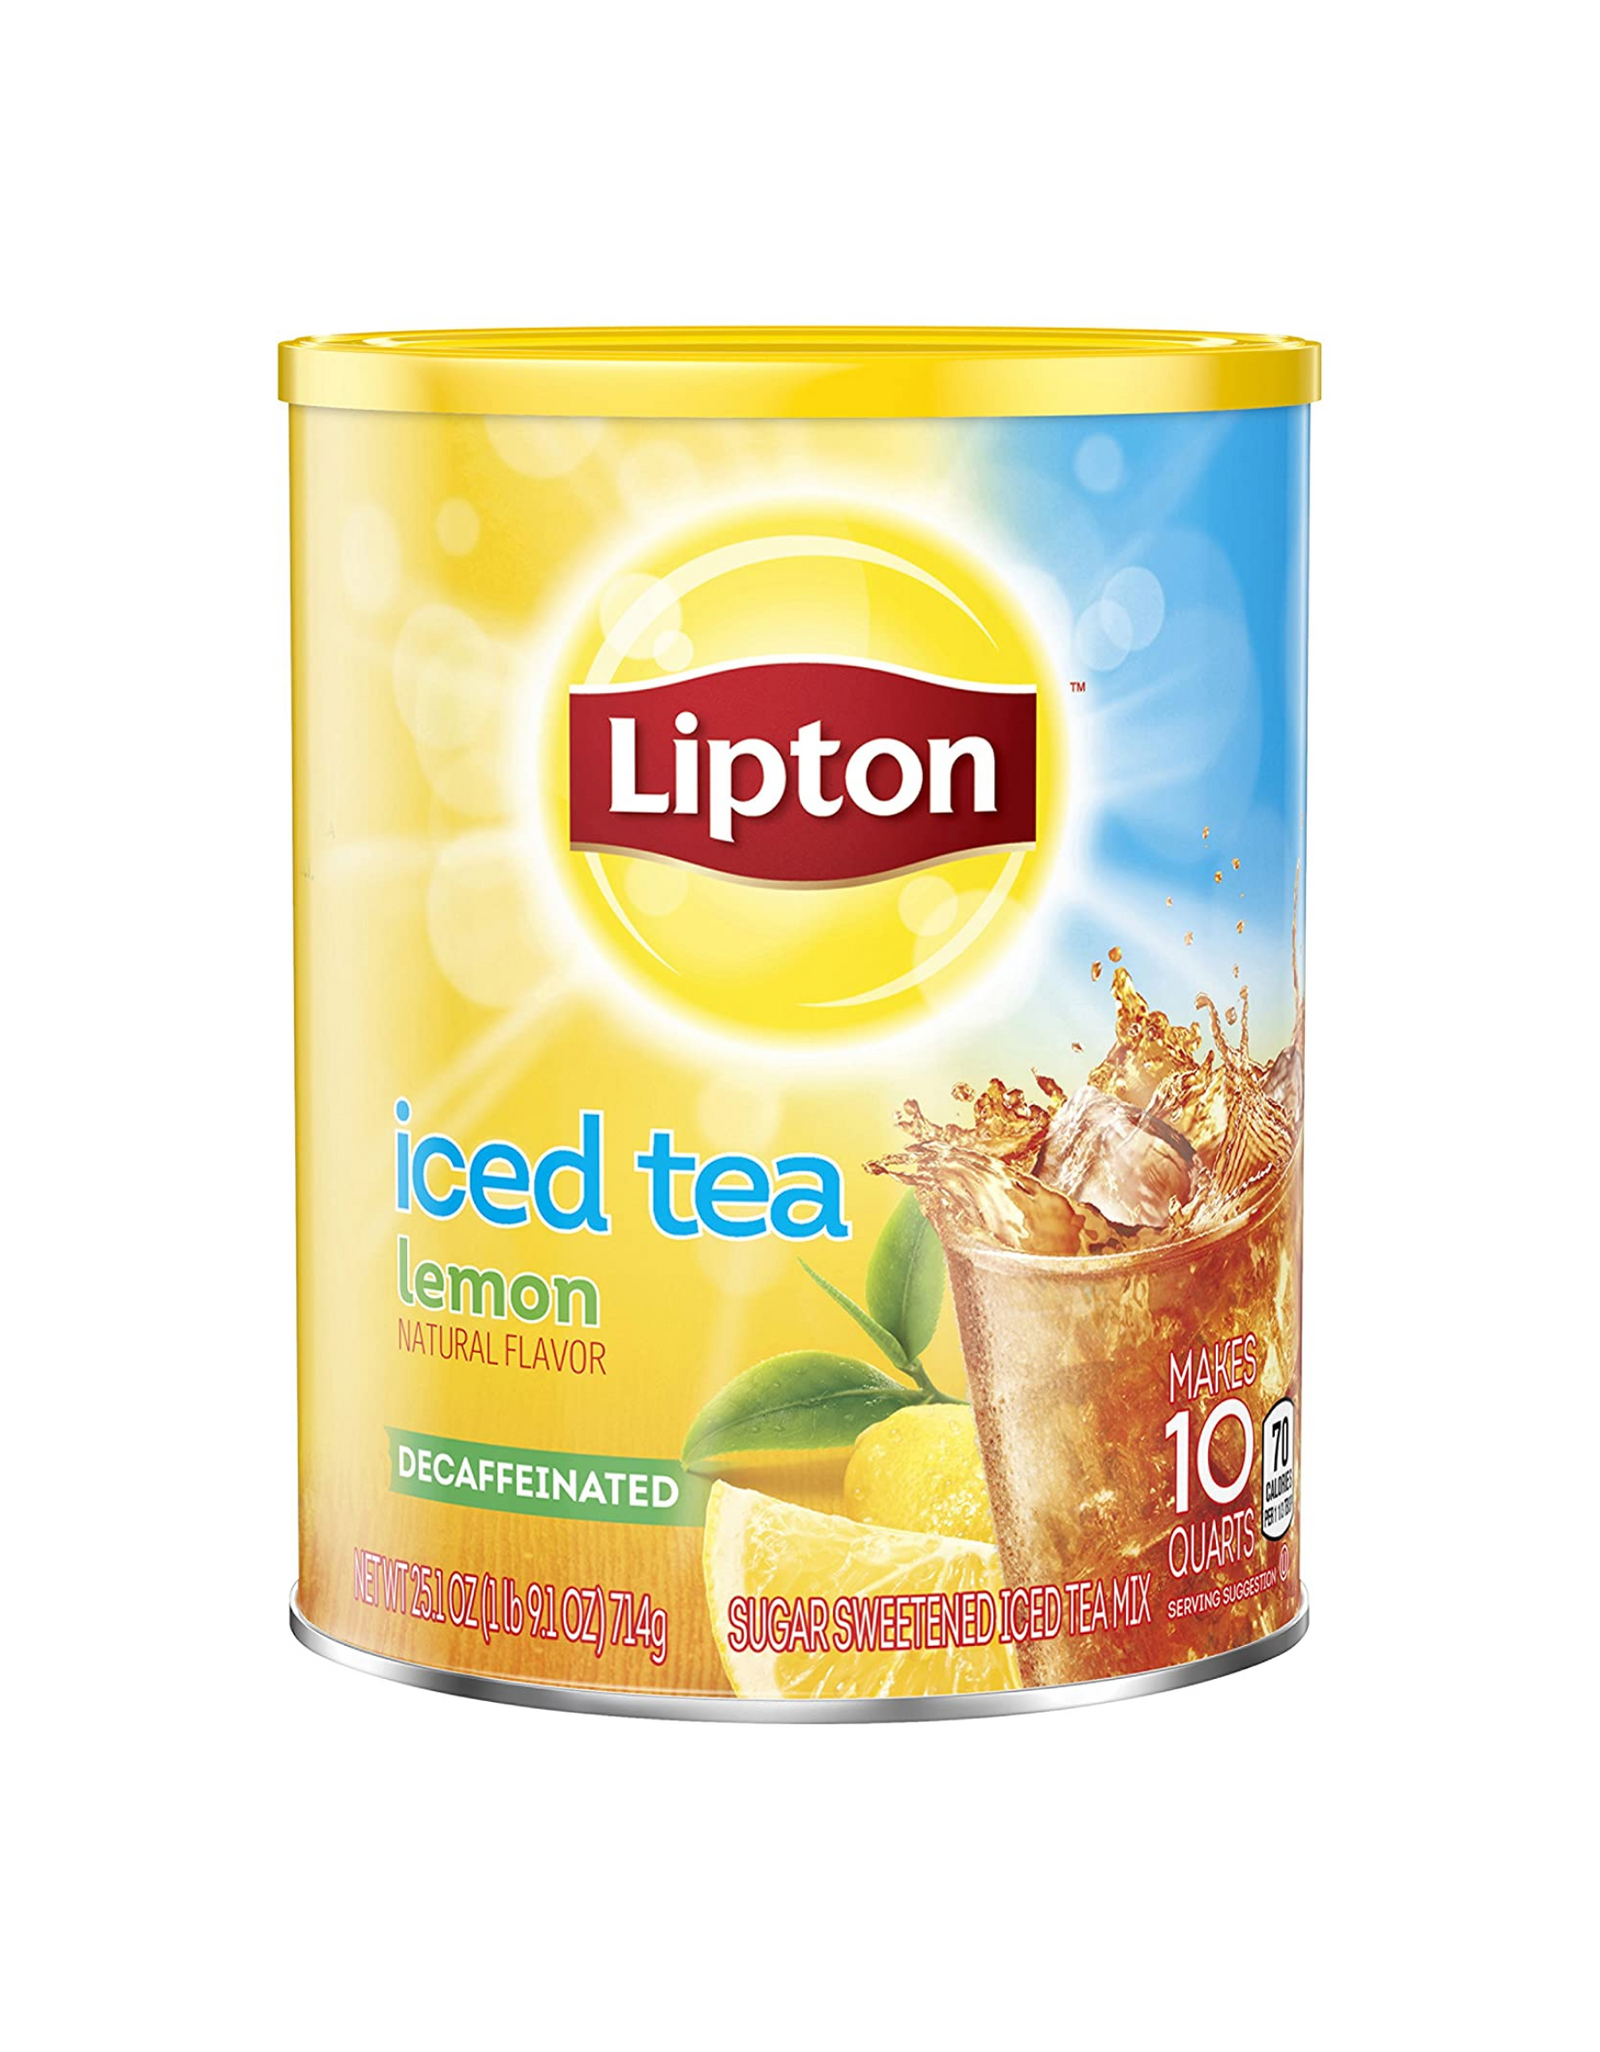 Lipton Black Iced Tea Mix Decaf Lemon Natural Flavor, Makes 10 Quarts, 25.1 oz (Pack of 6)